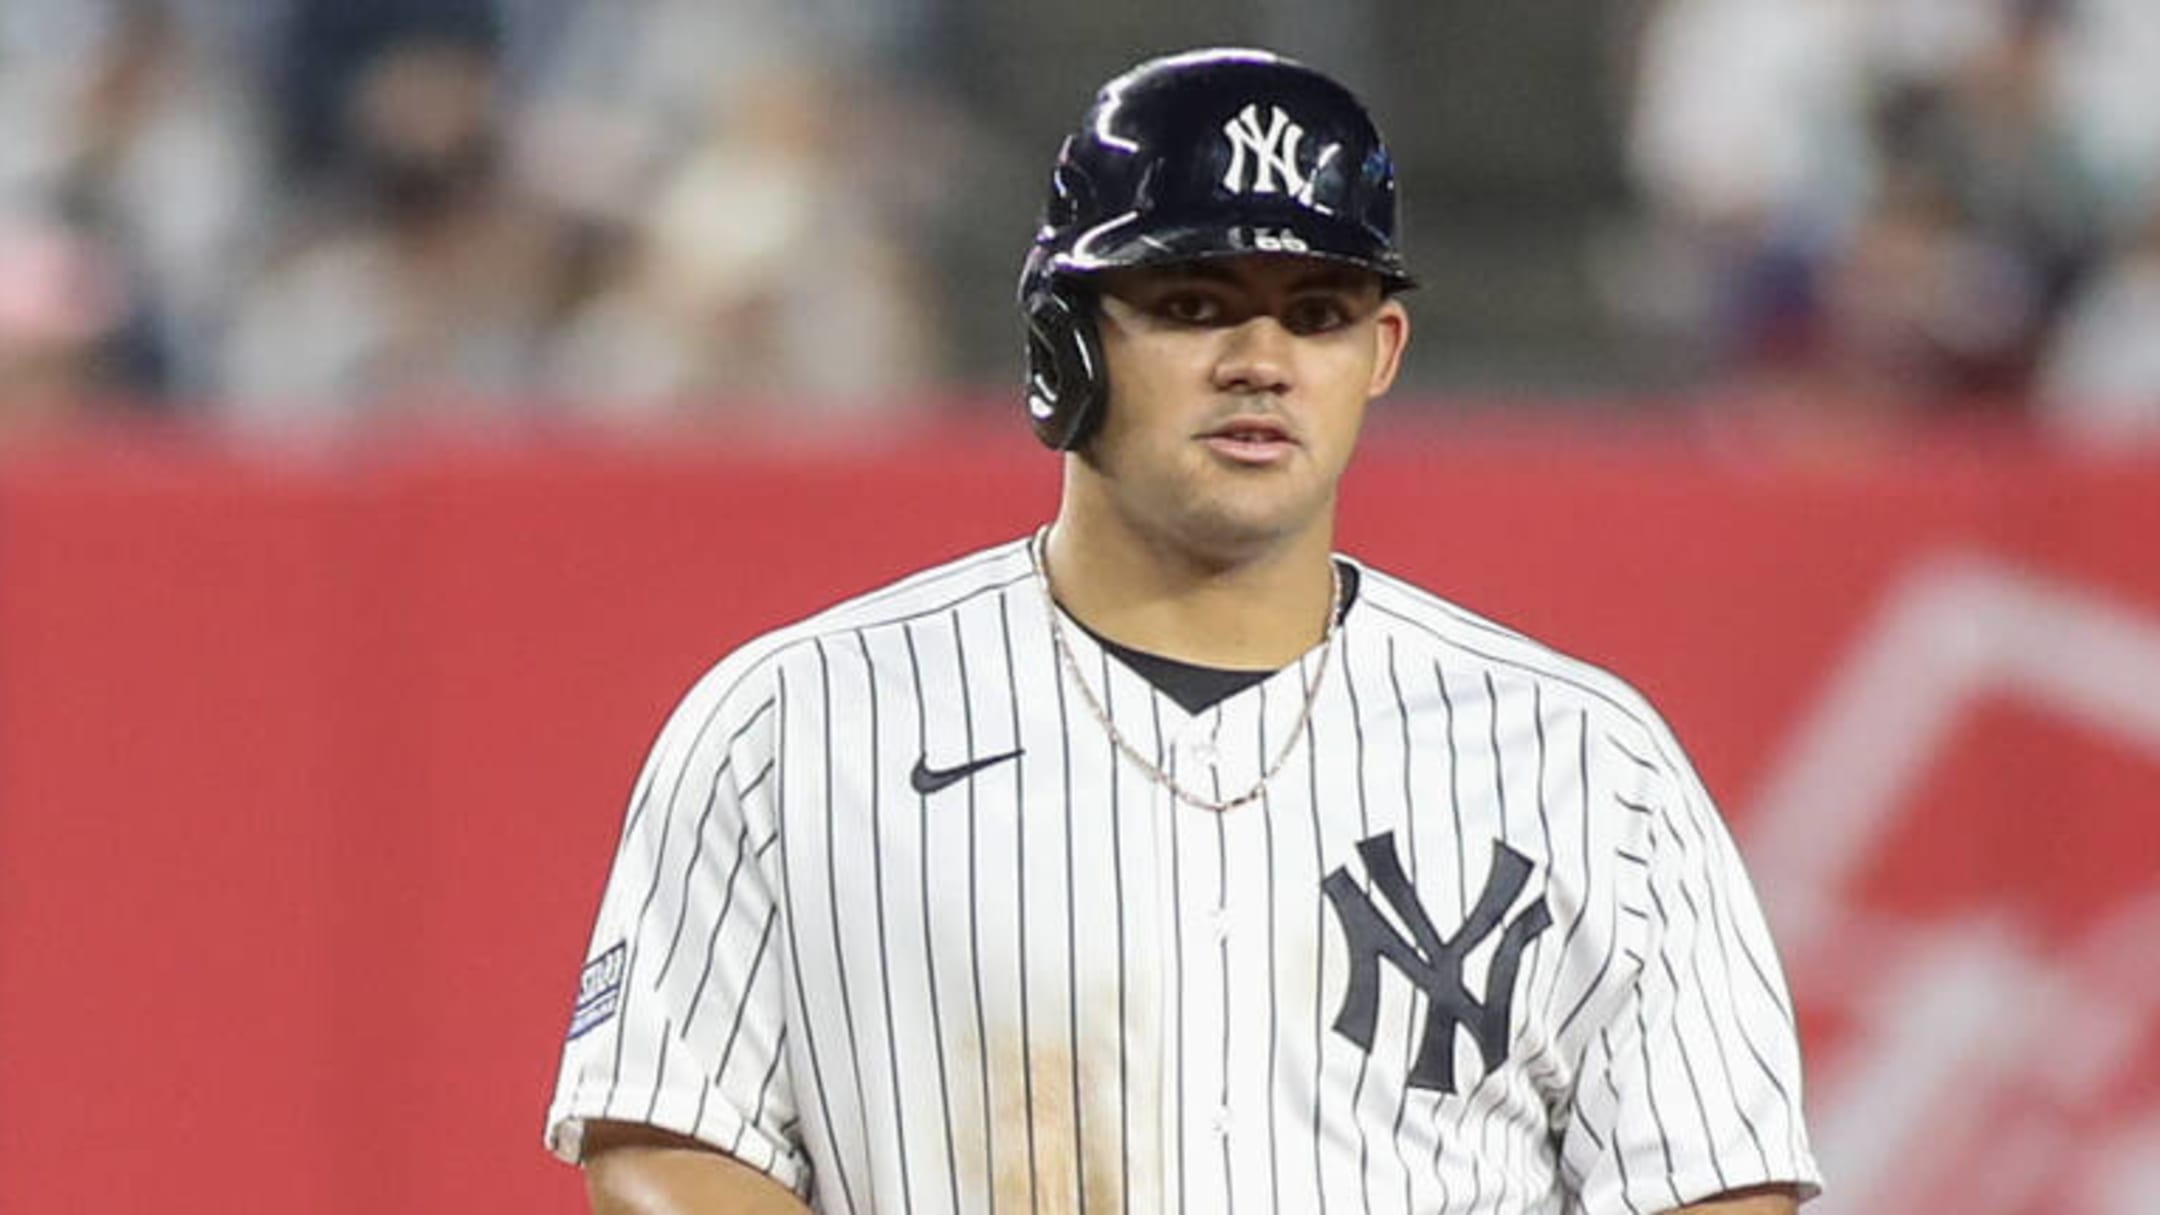 Yankees shortstop Didi Gregorius needs Tommy John surgery - The